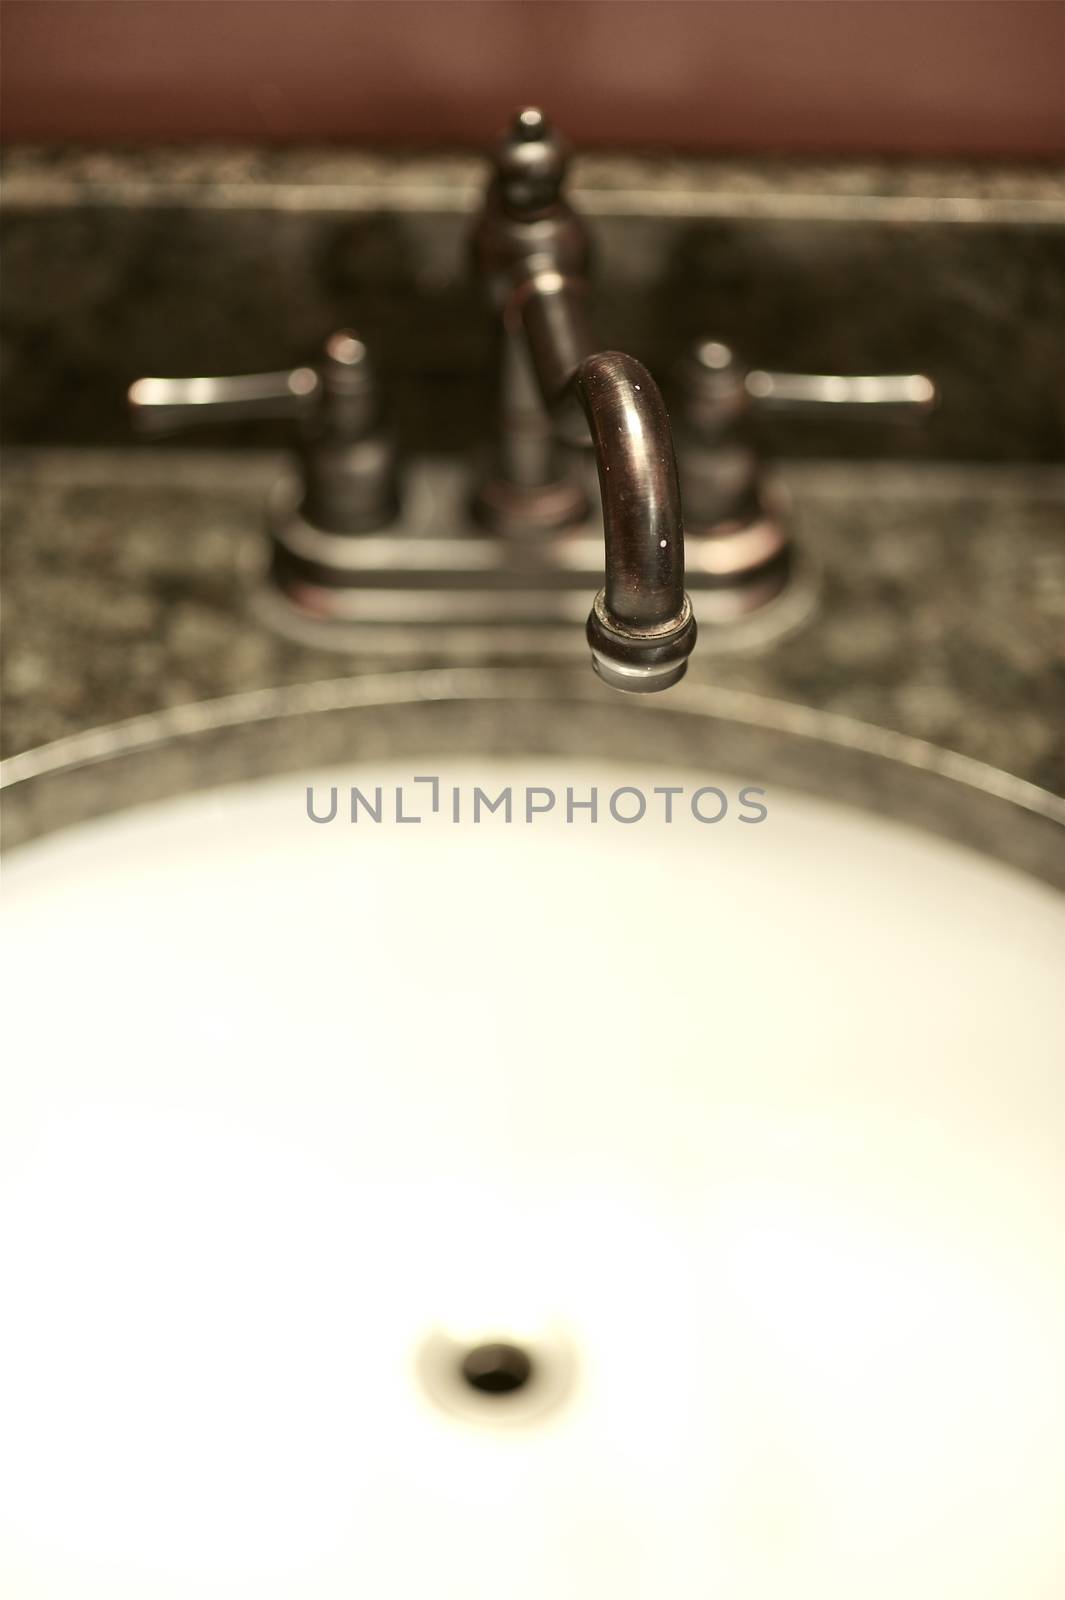 Brown Metal Faucet and White Basin - Bathroom Interior.